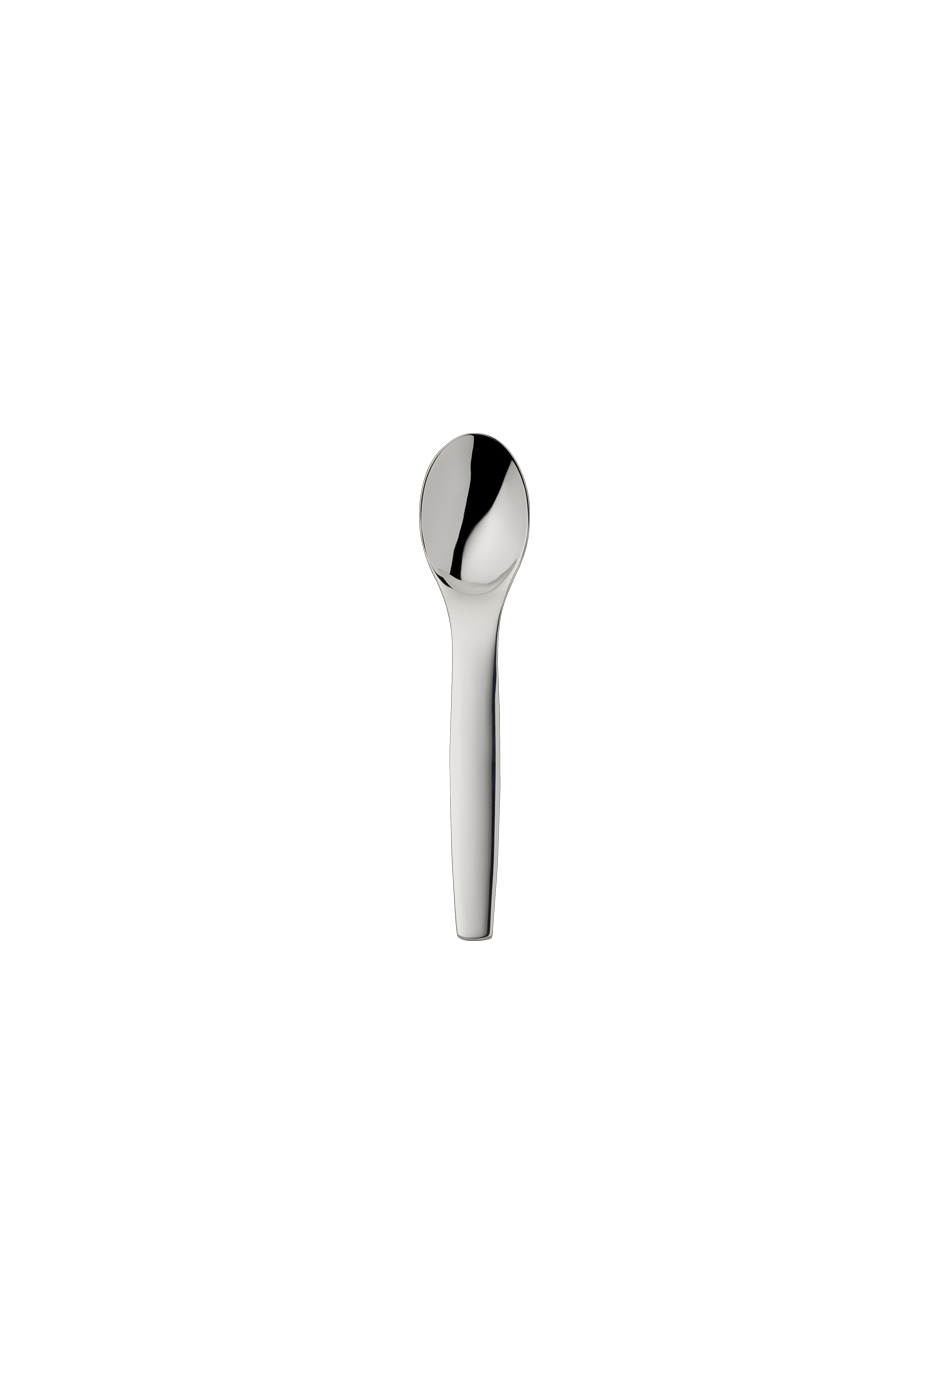 Pax Mocha Spoon 10,5 Cm (18/8 stainless steel)